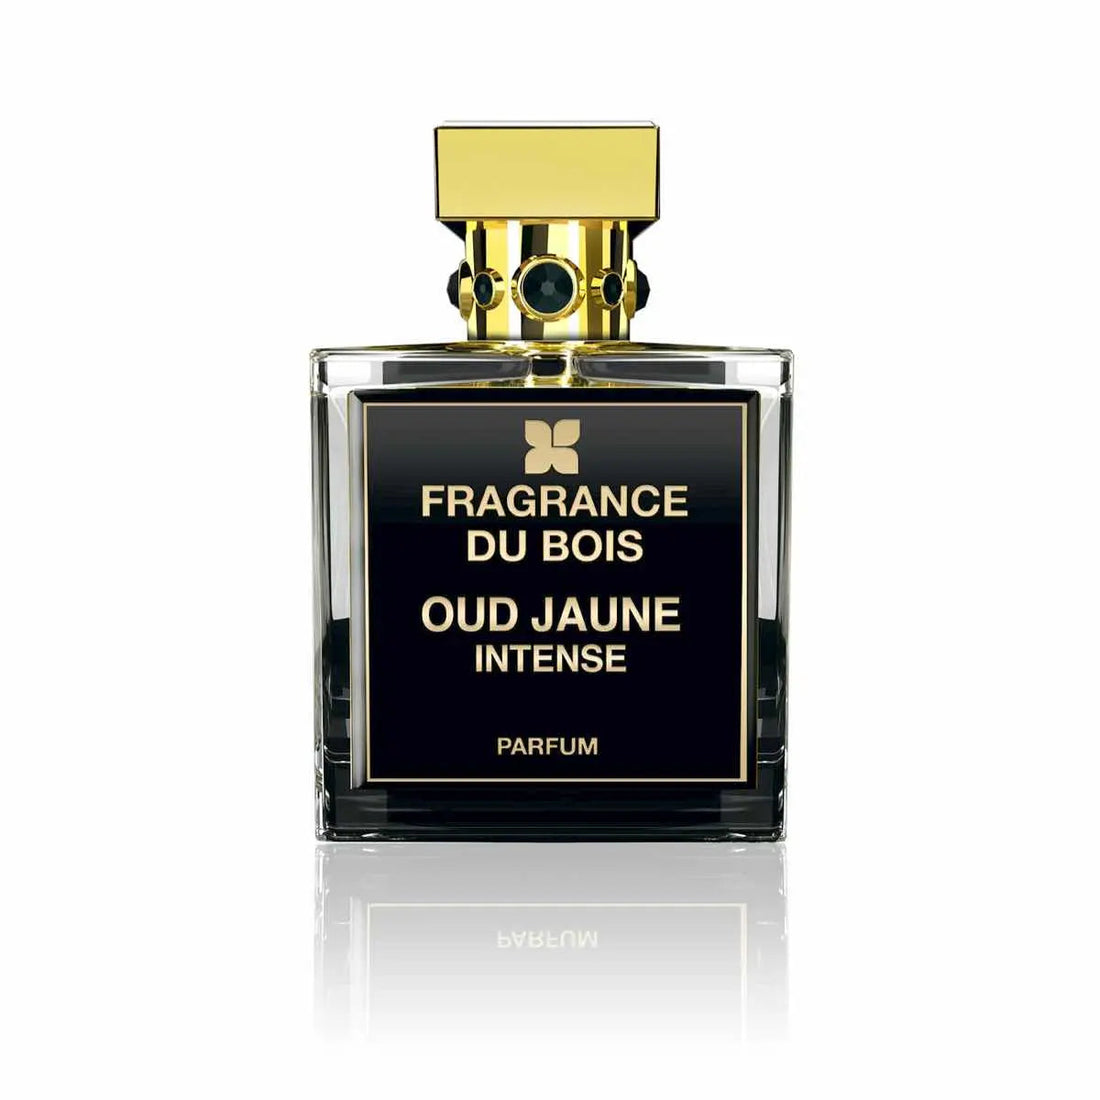 Аромат du bois Oud Jaune parfum - 100 мл